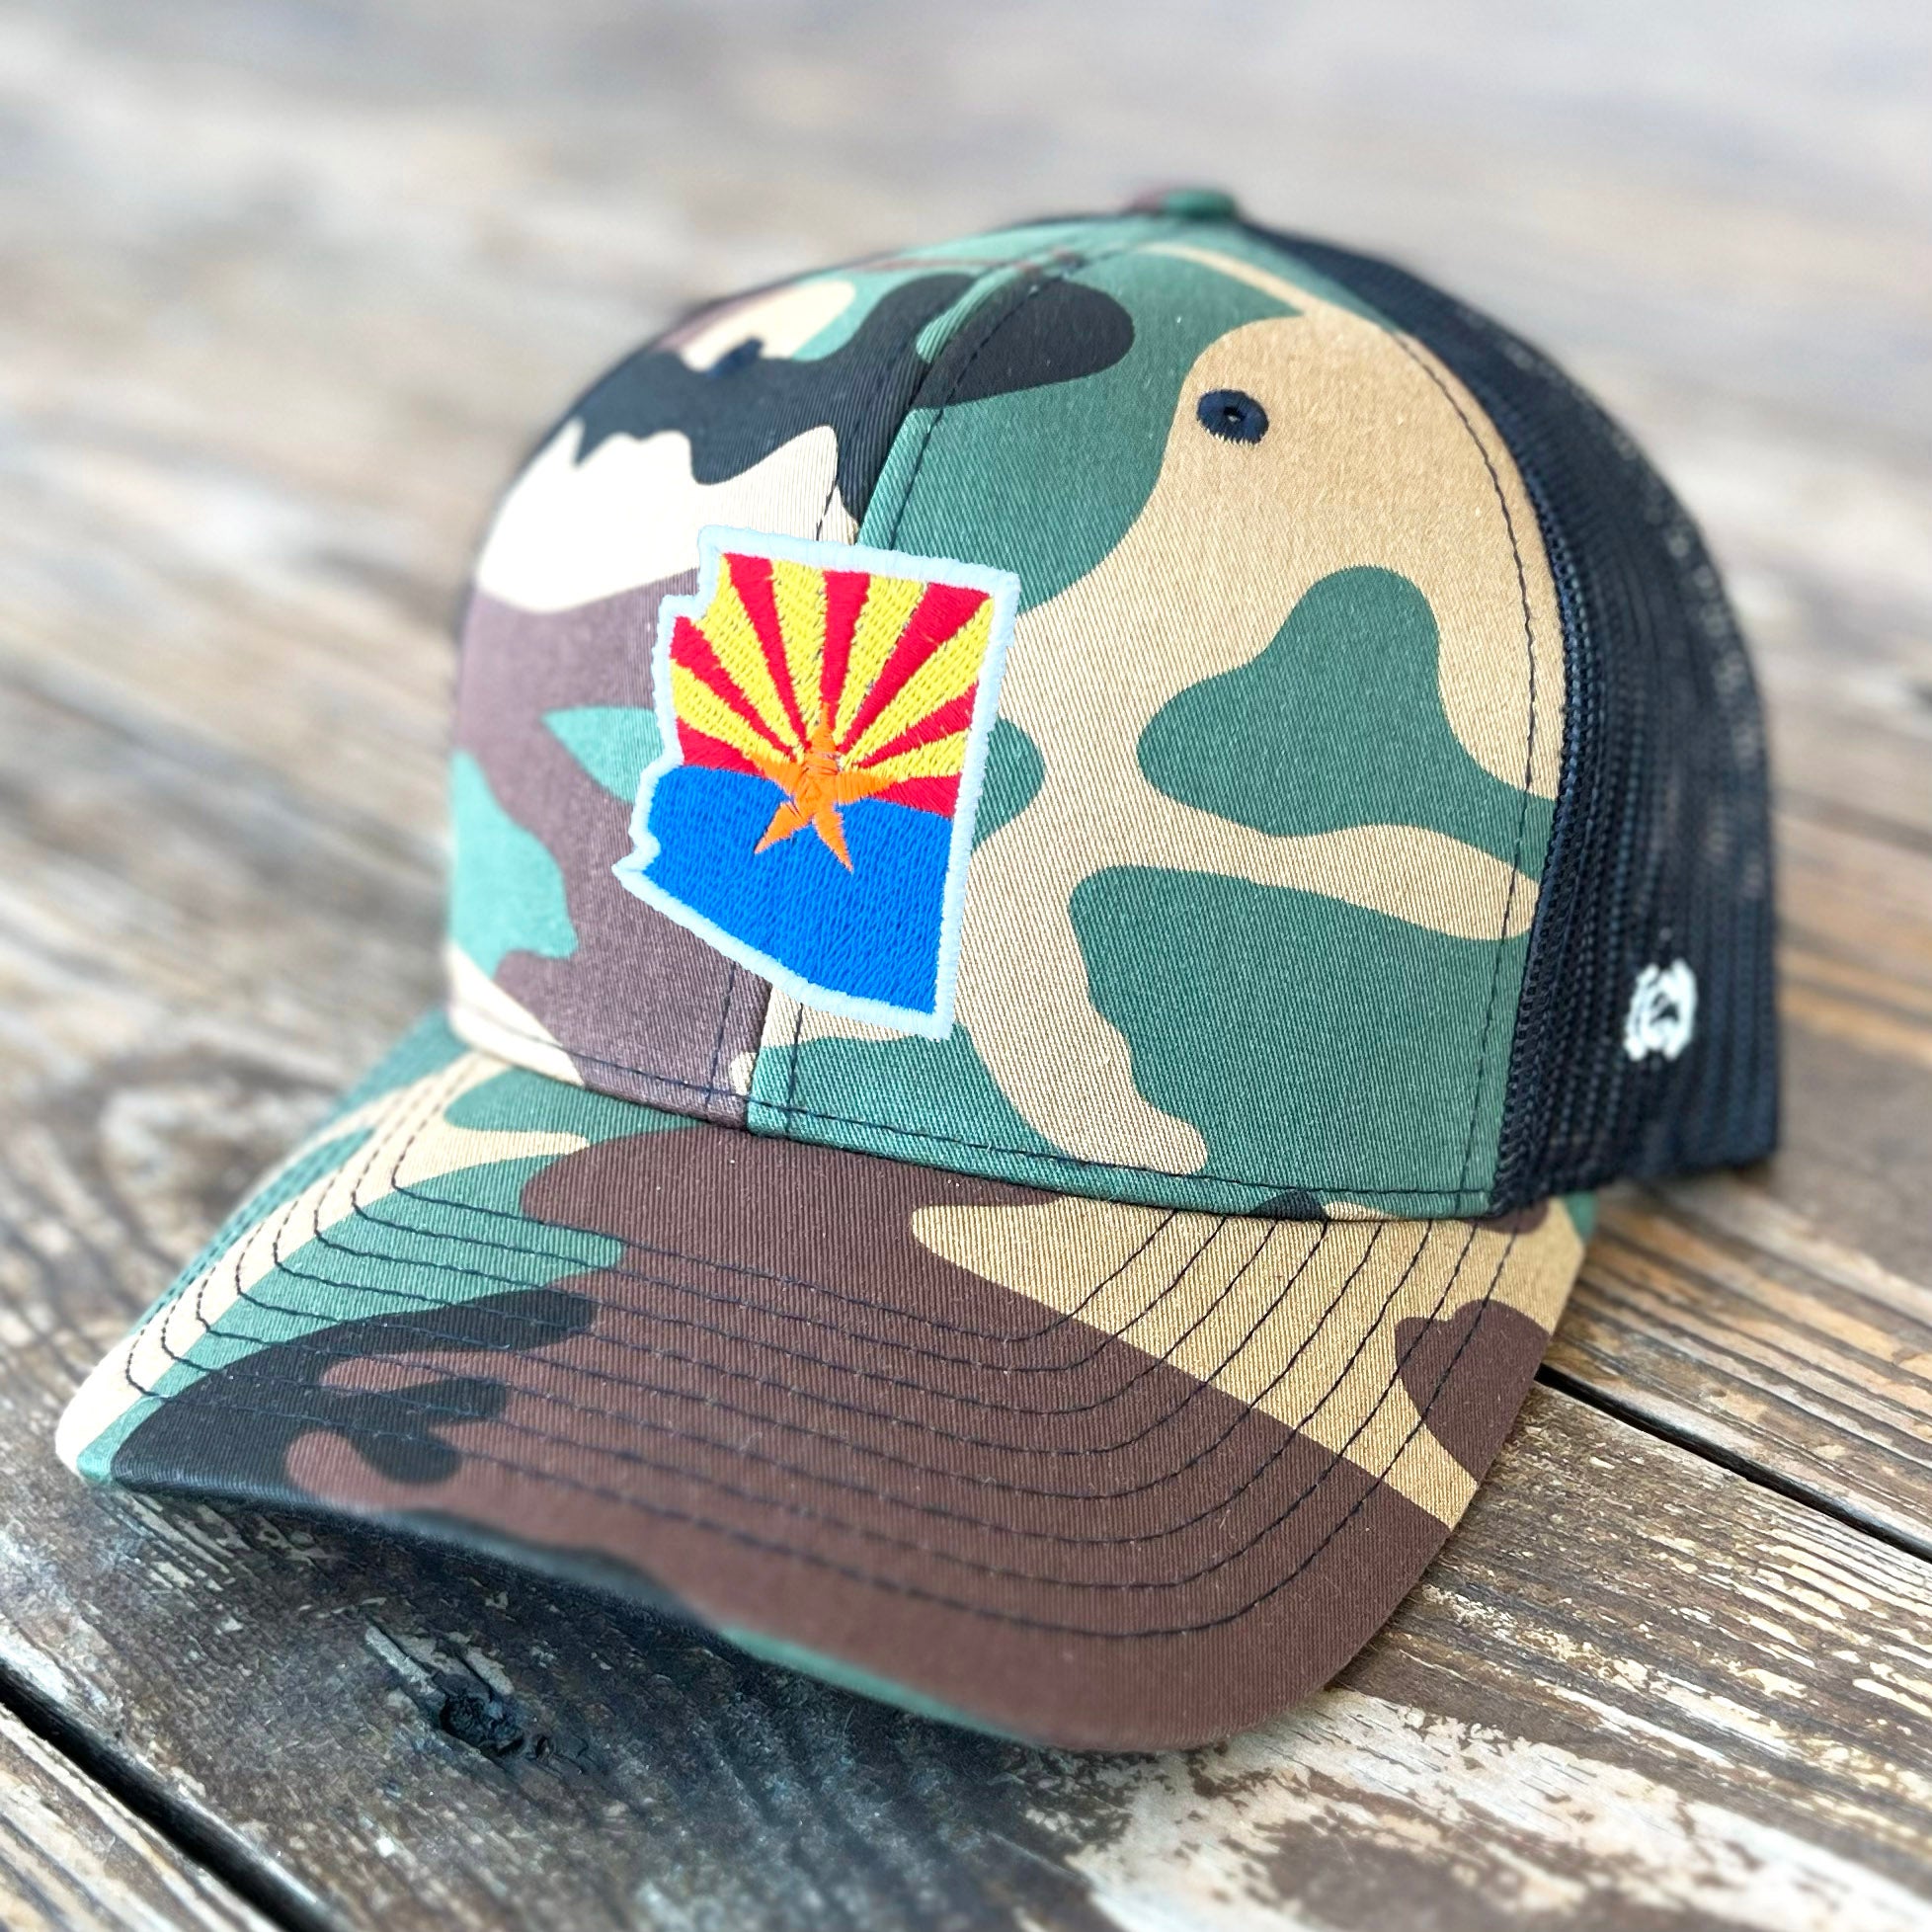 Arizona State Flag Hat, Black – SL Revival Co.